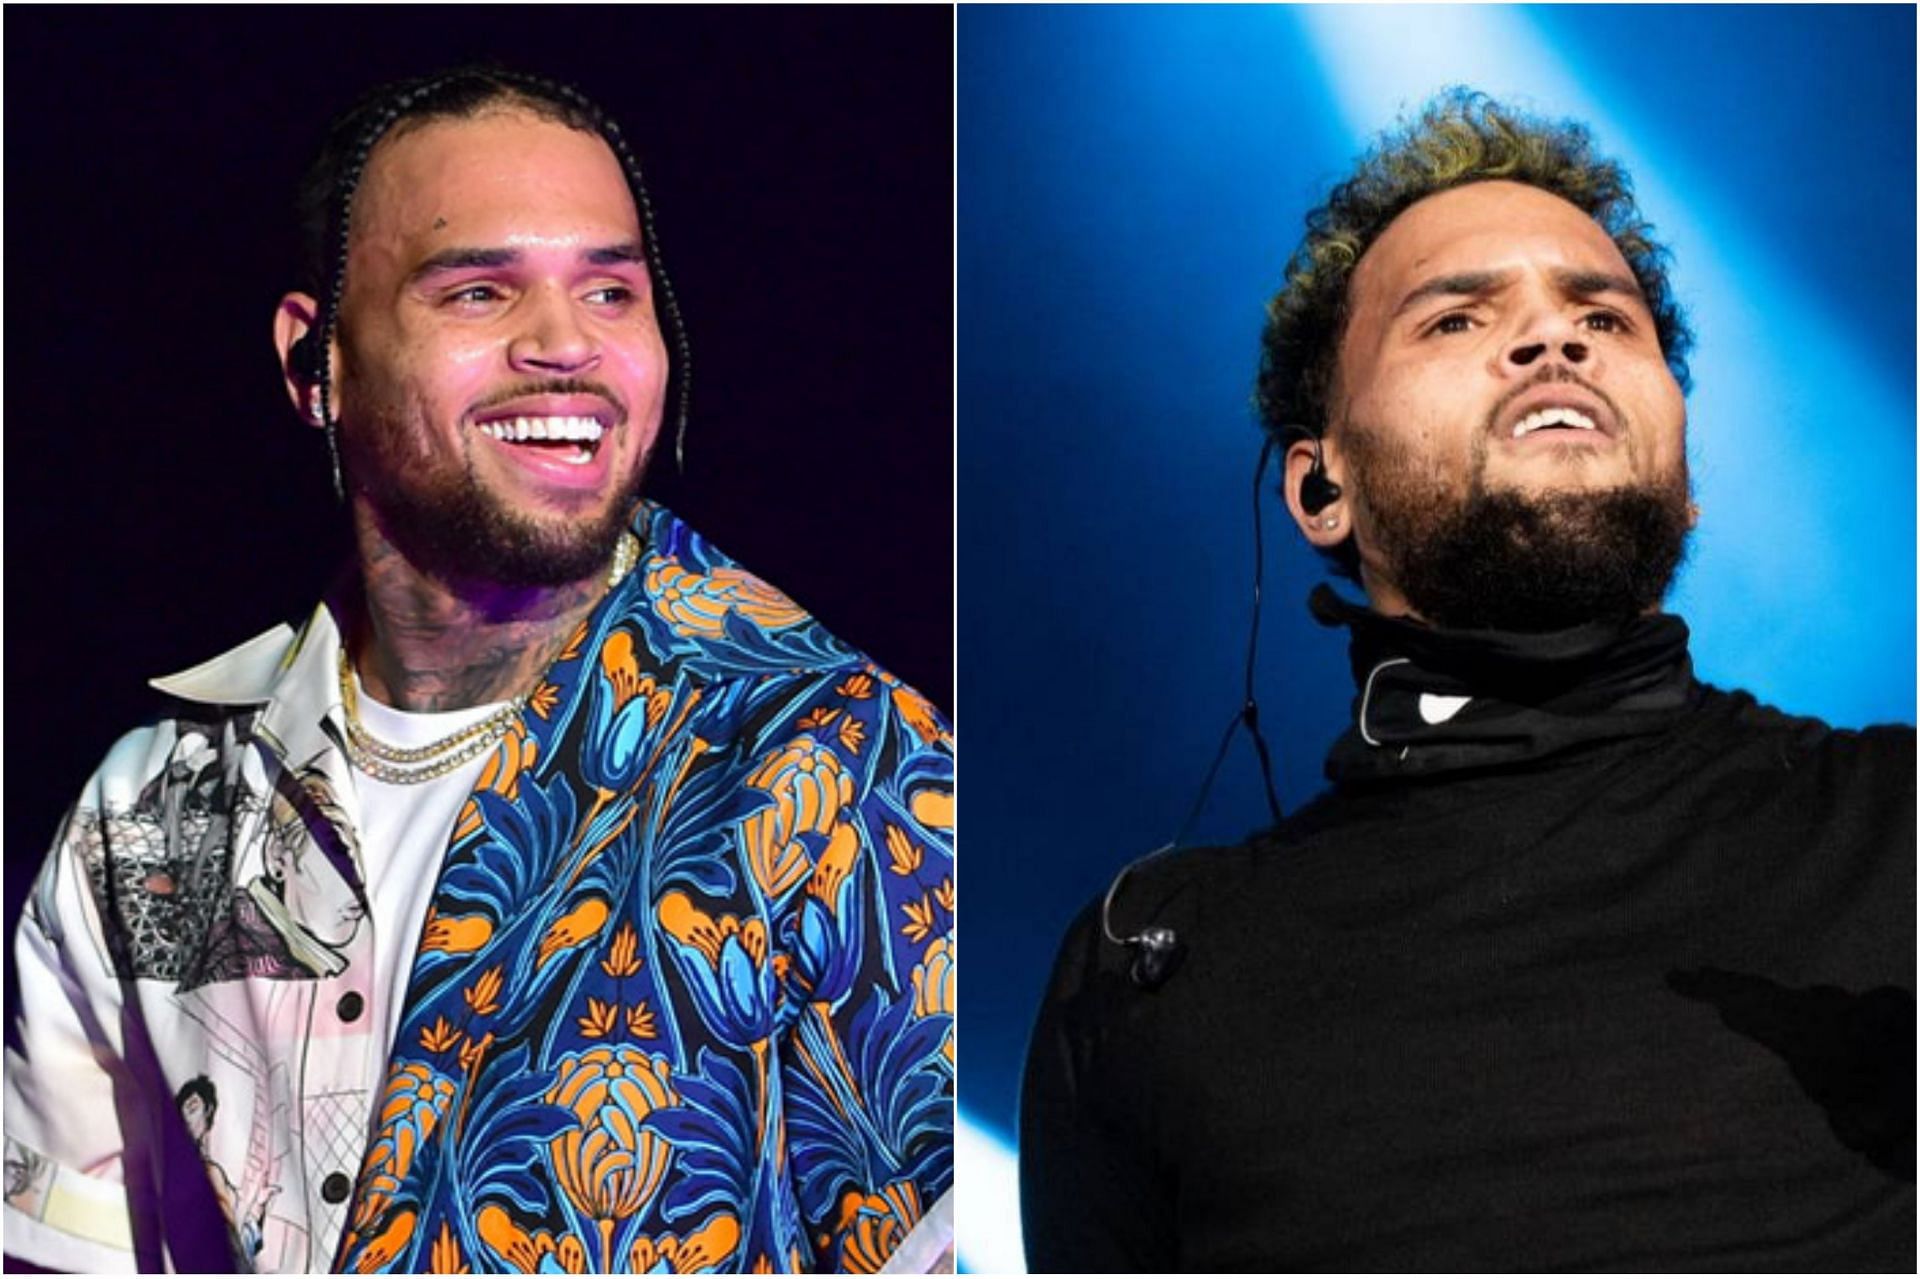 Chris Brown is going to drop his next album soon